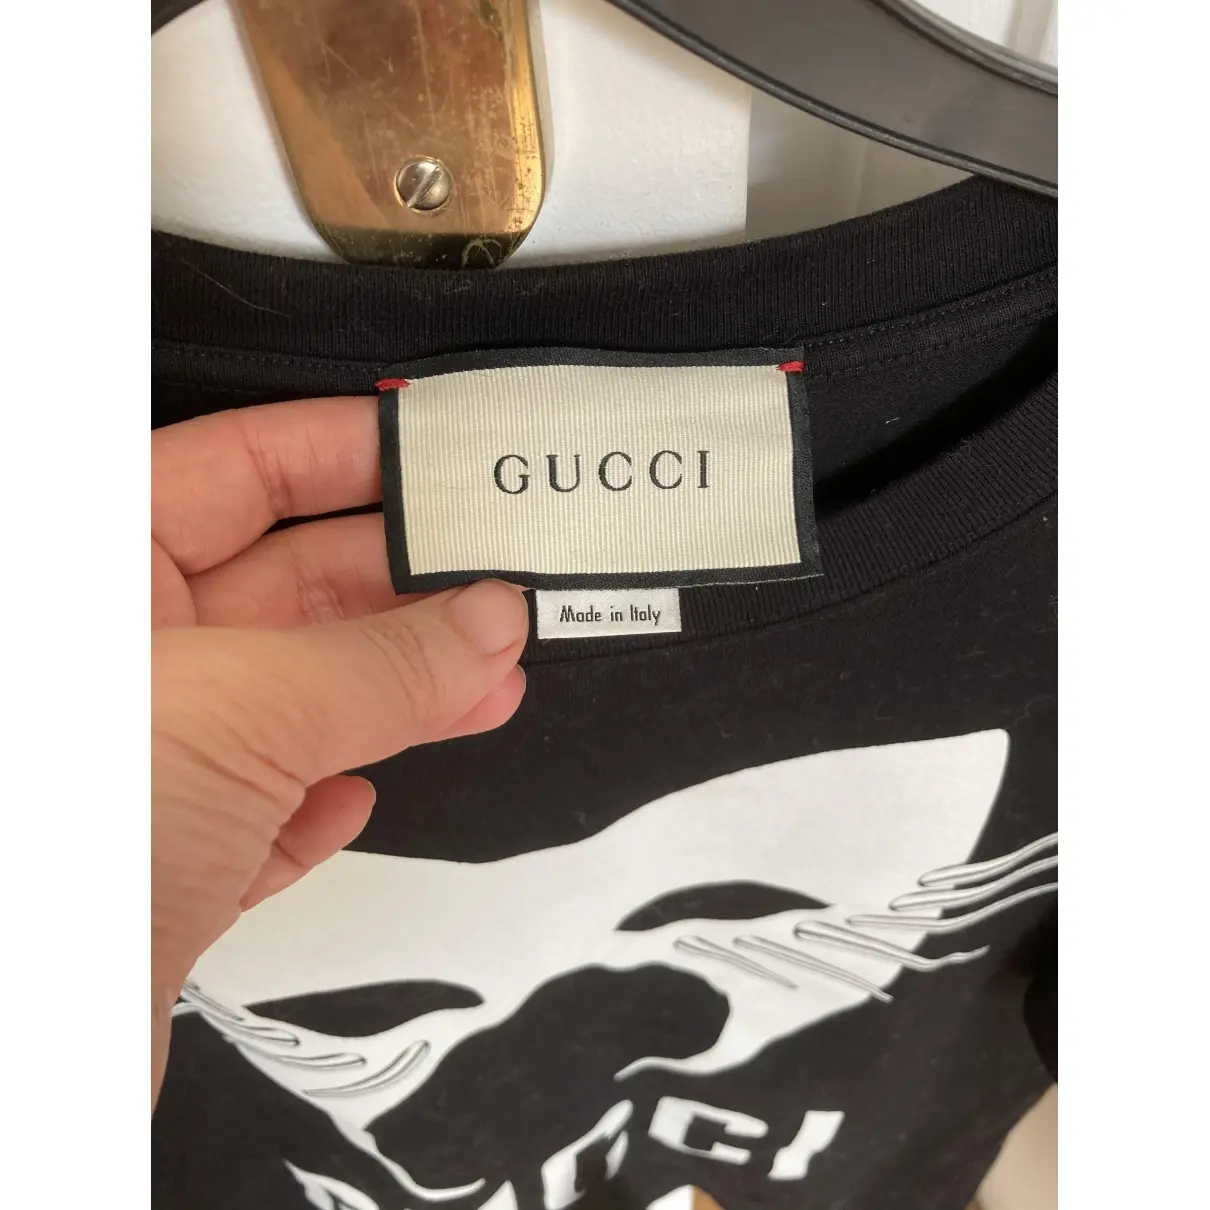 Buy Gucci Black Cotton Top online